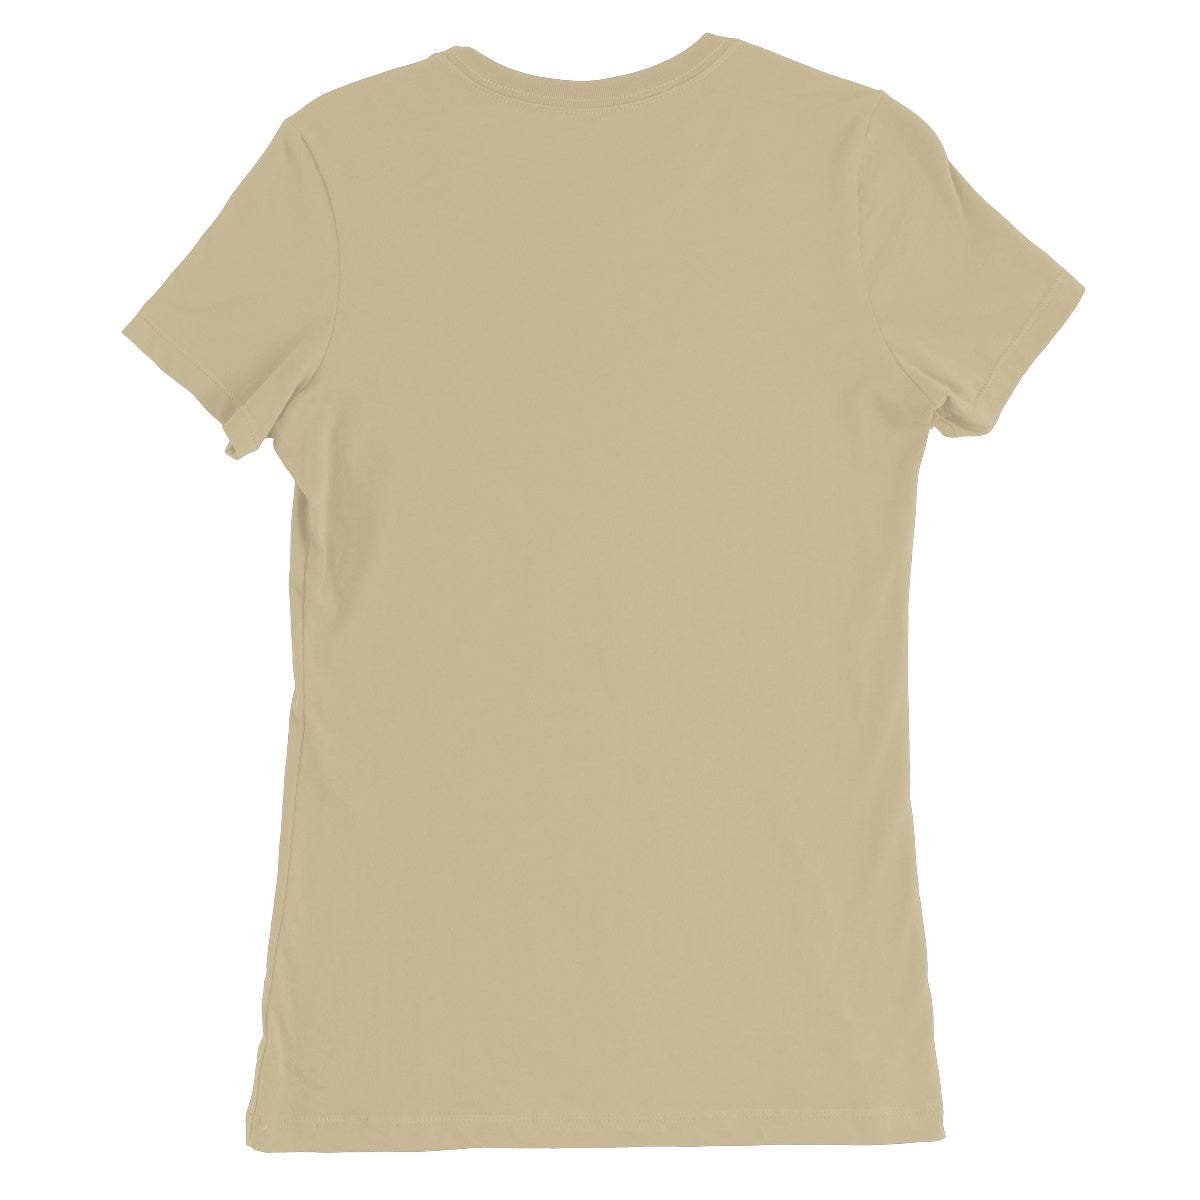 Binary Cascade, Black and White Women's Favourite T-Shirt